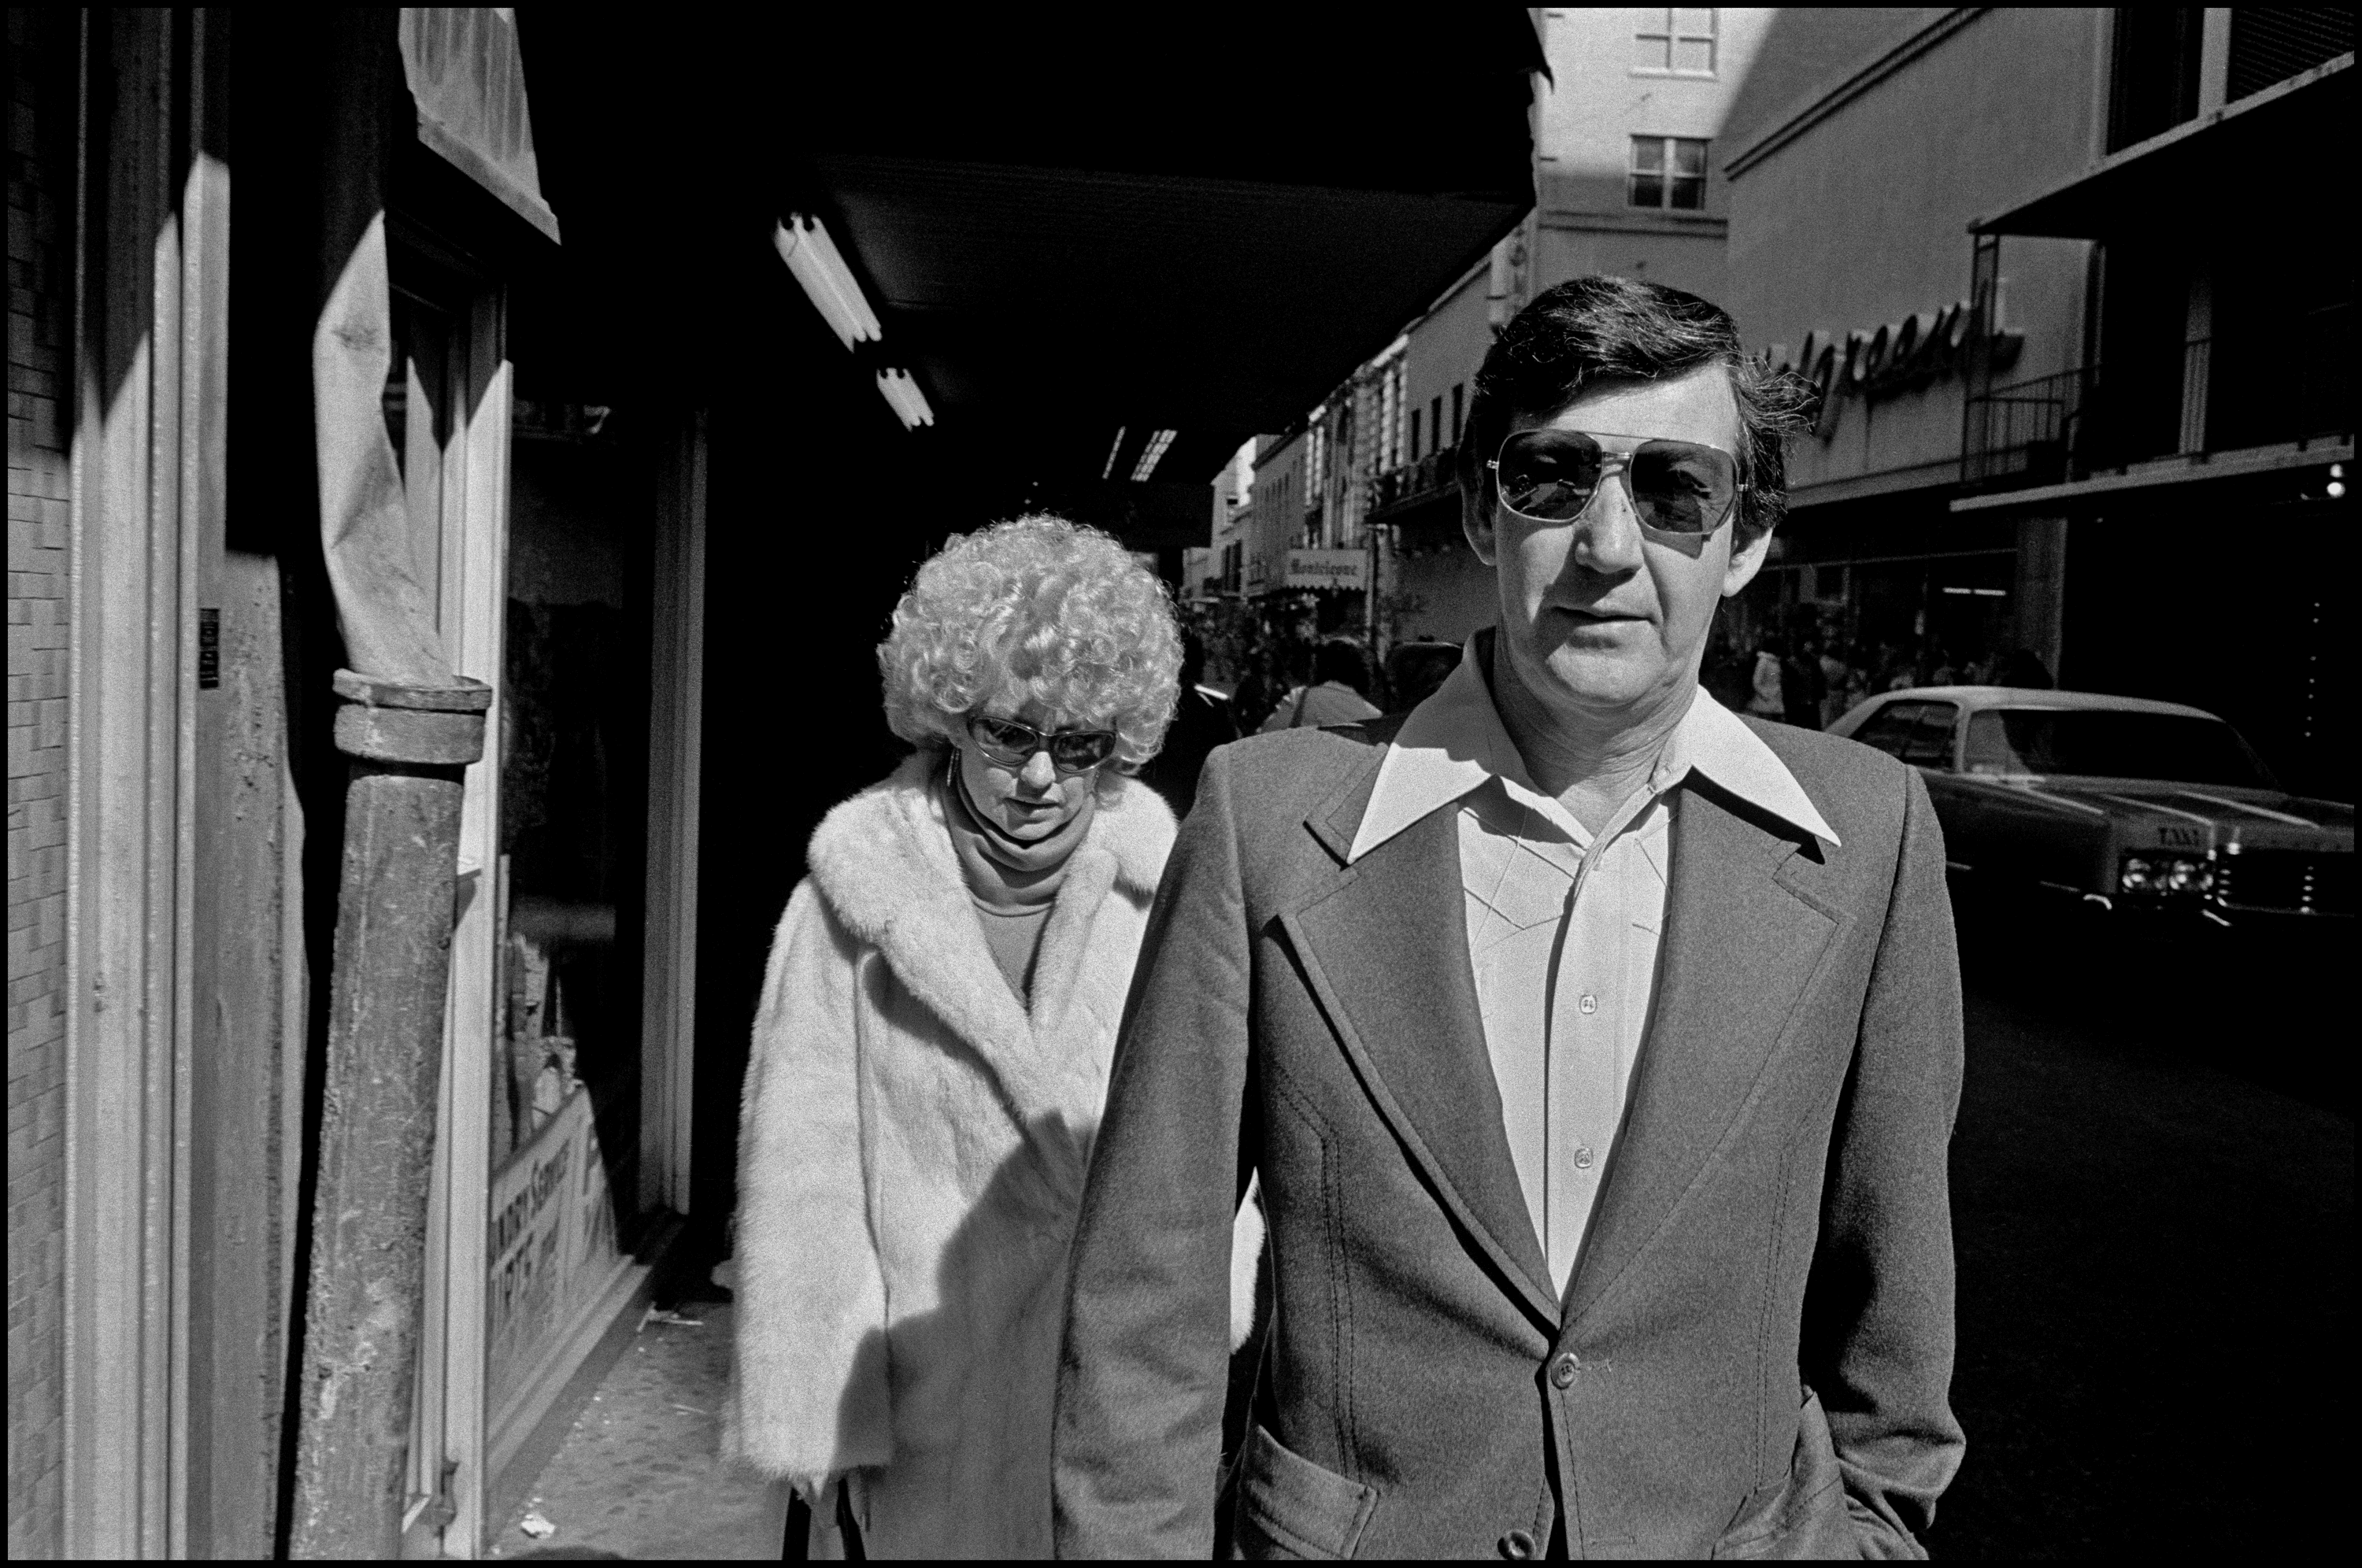 New Orleans, Louisiana, 1978